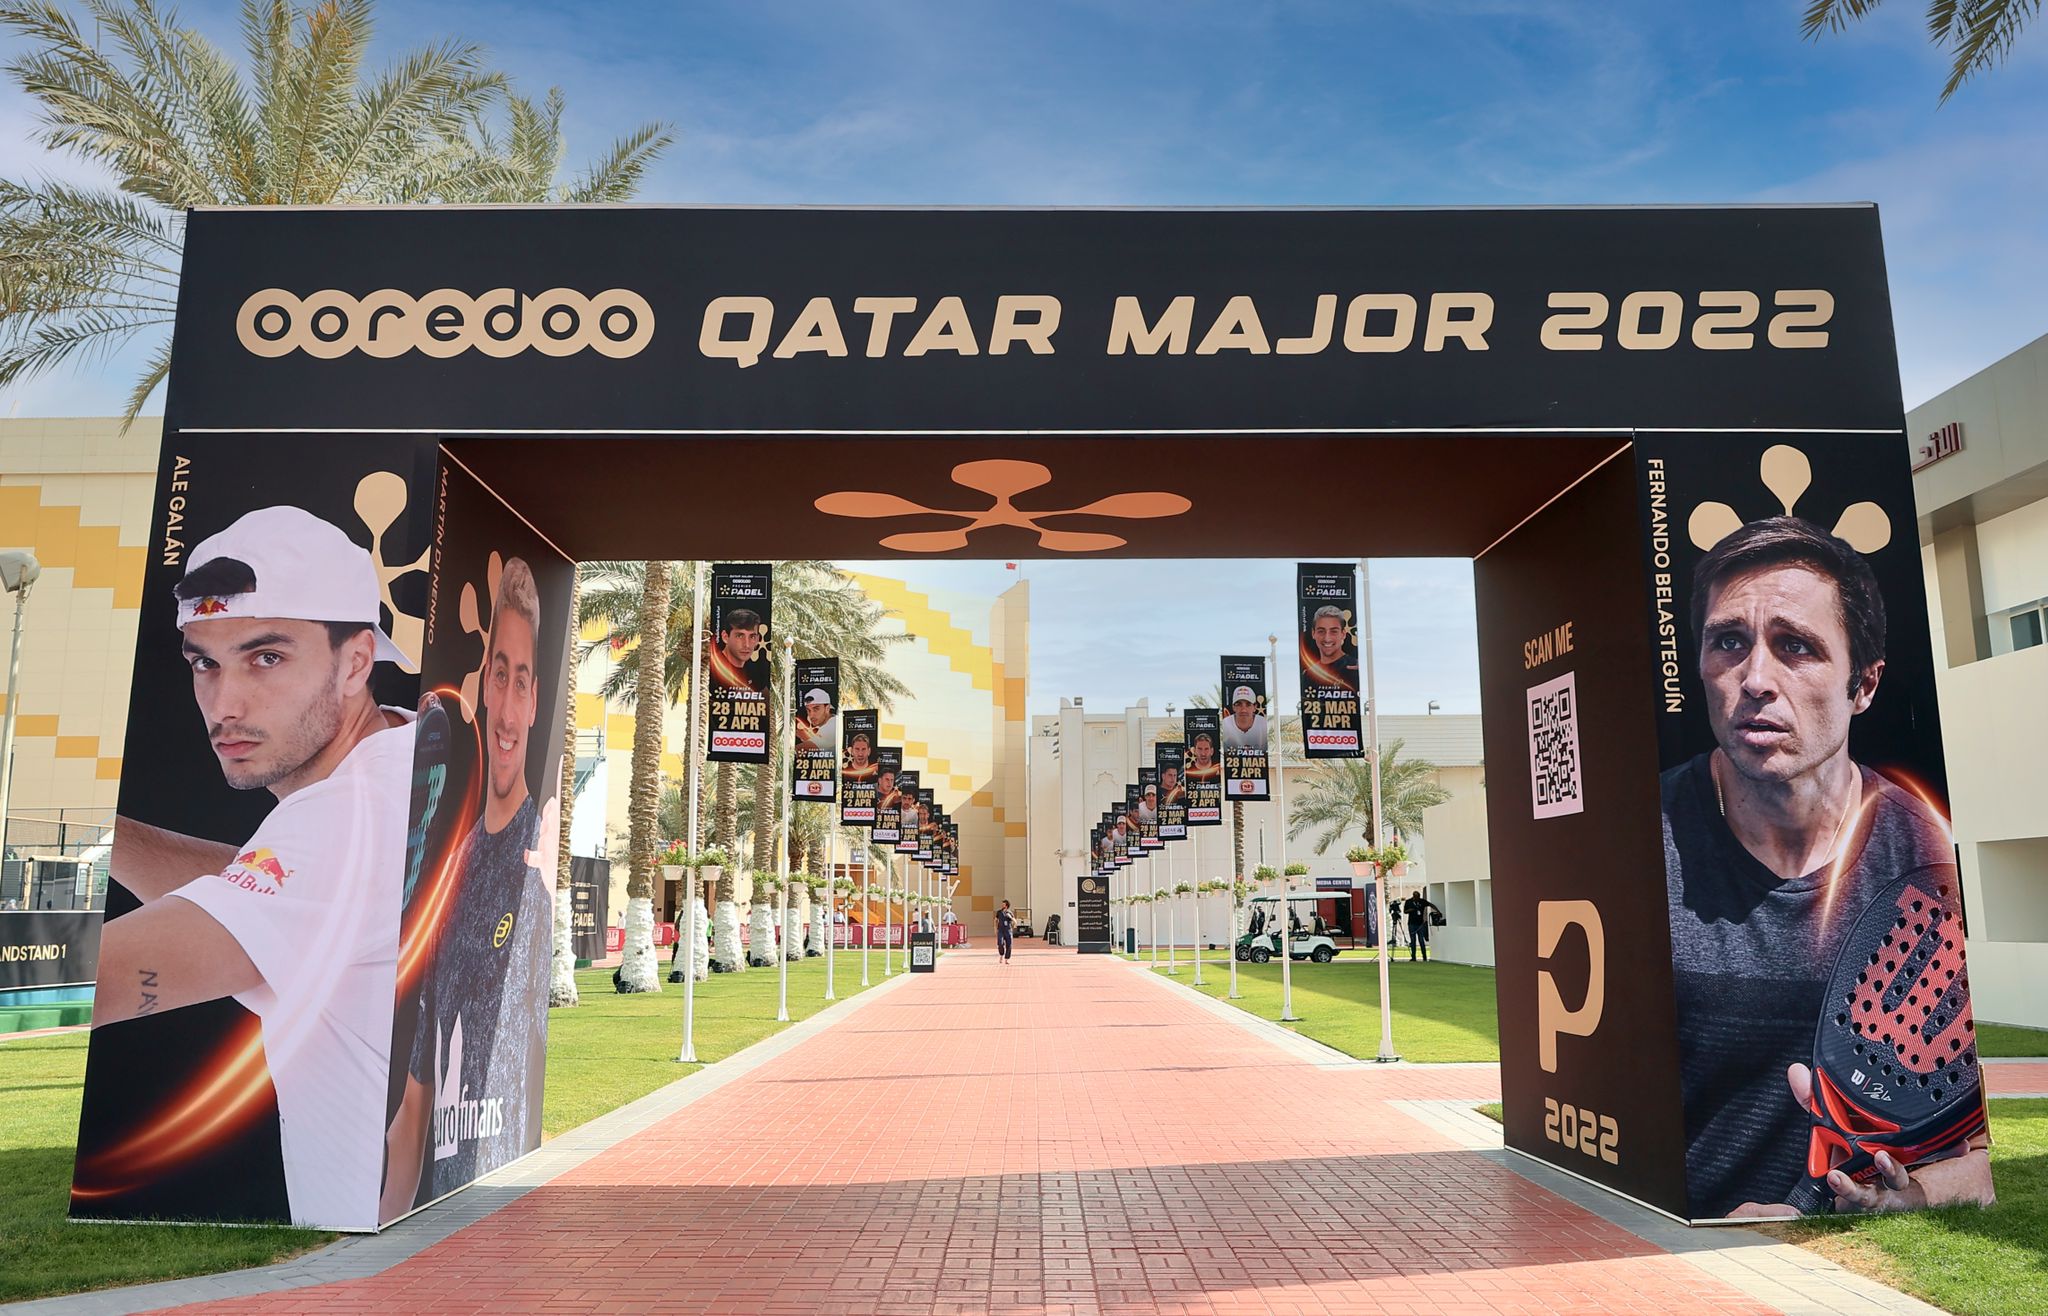 Ingresso Khalifa Doha Qatar Major 2022